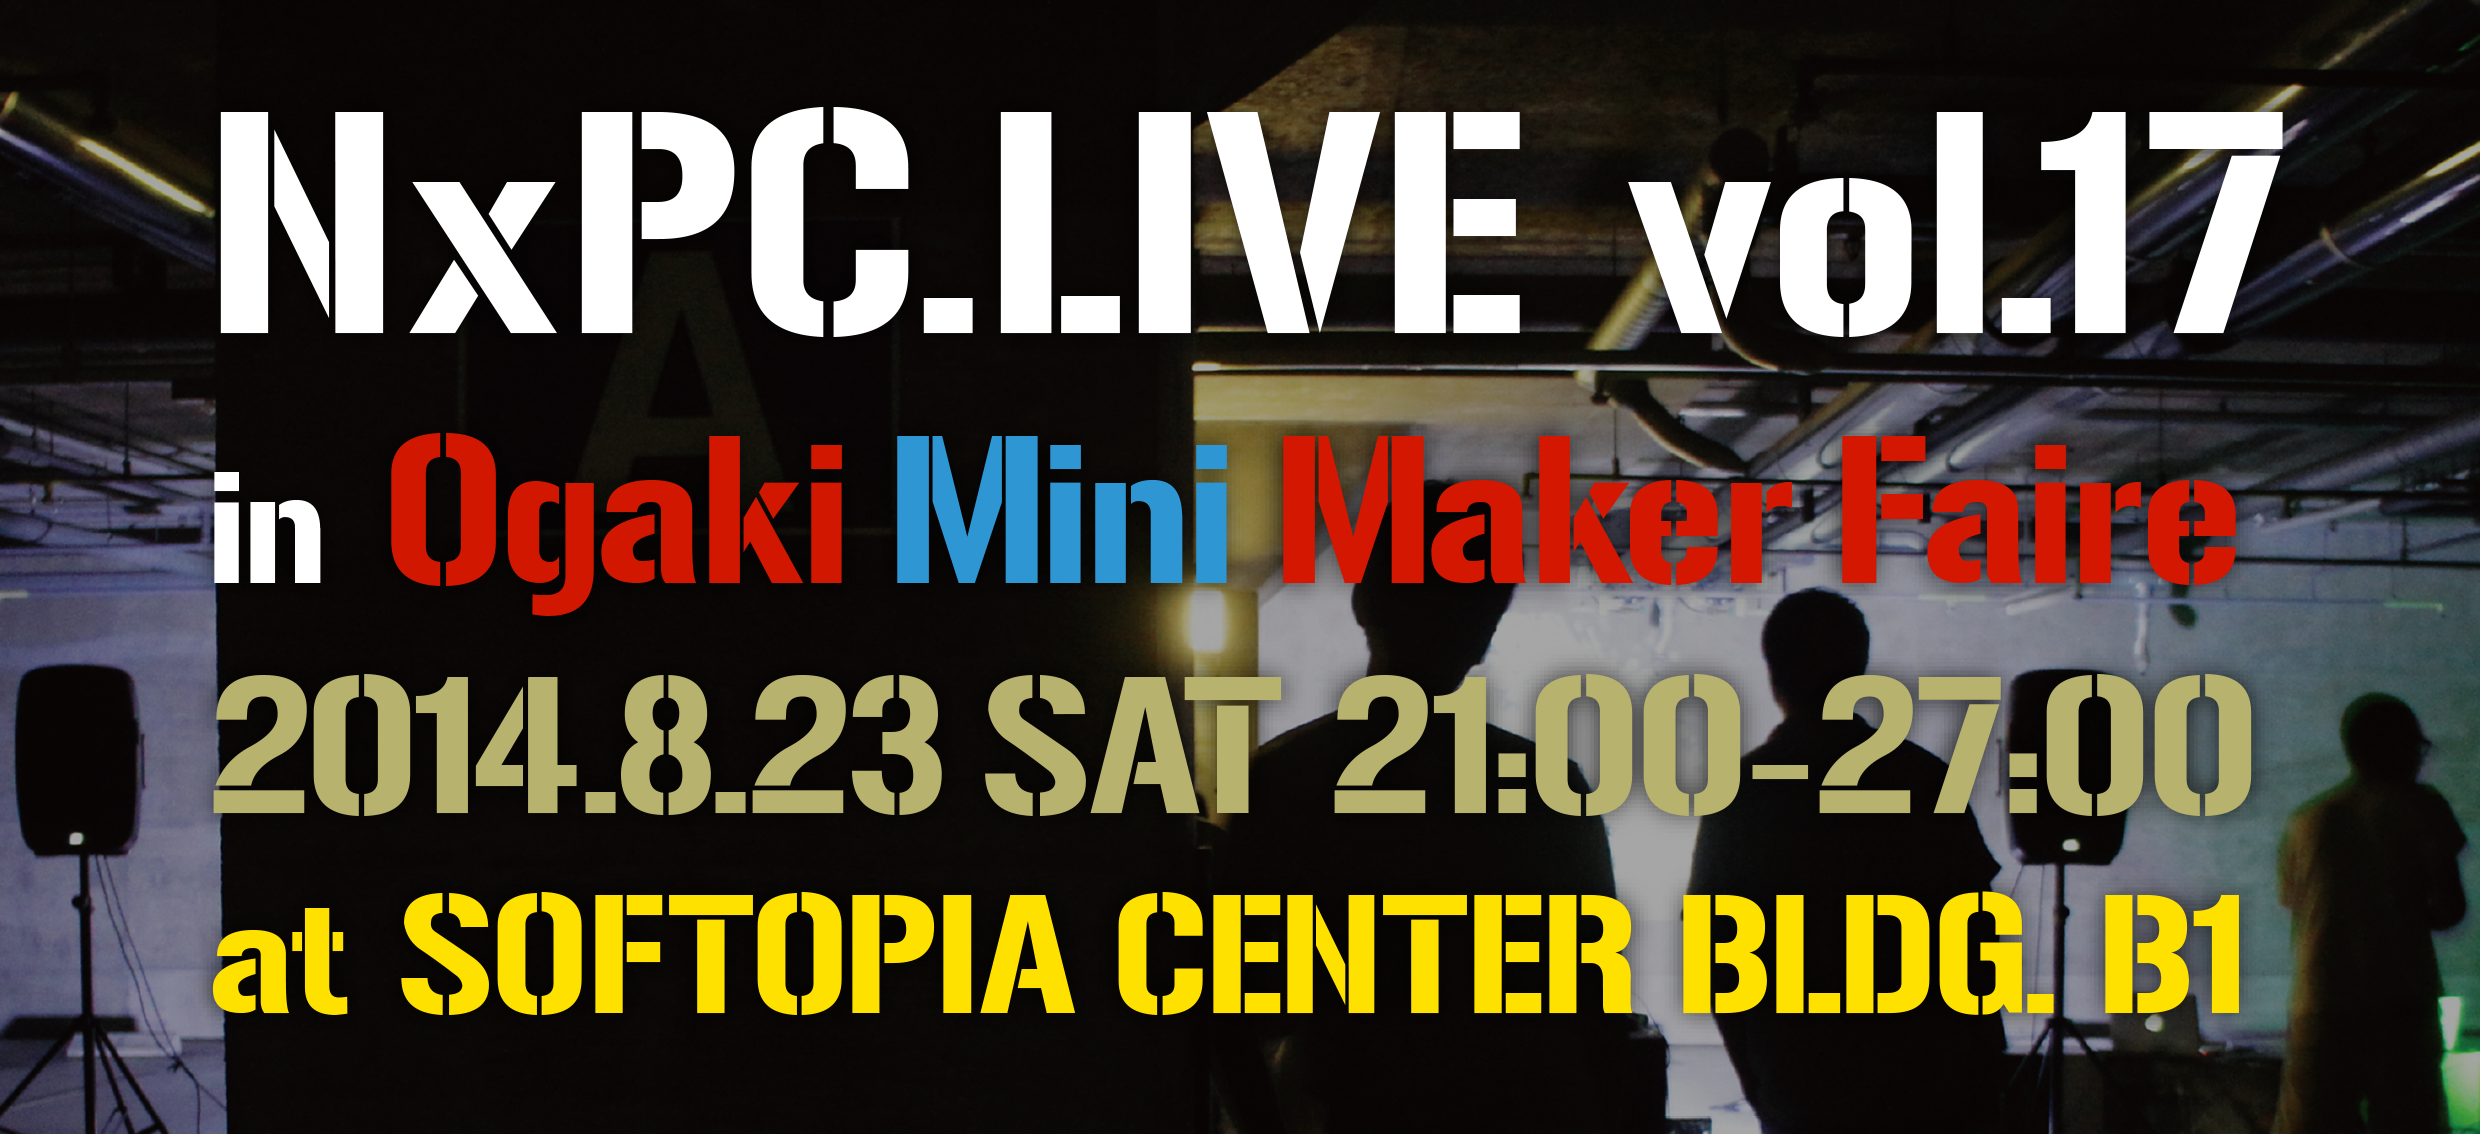 NxPC.Live Vol.17 in OMMF2014 